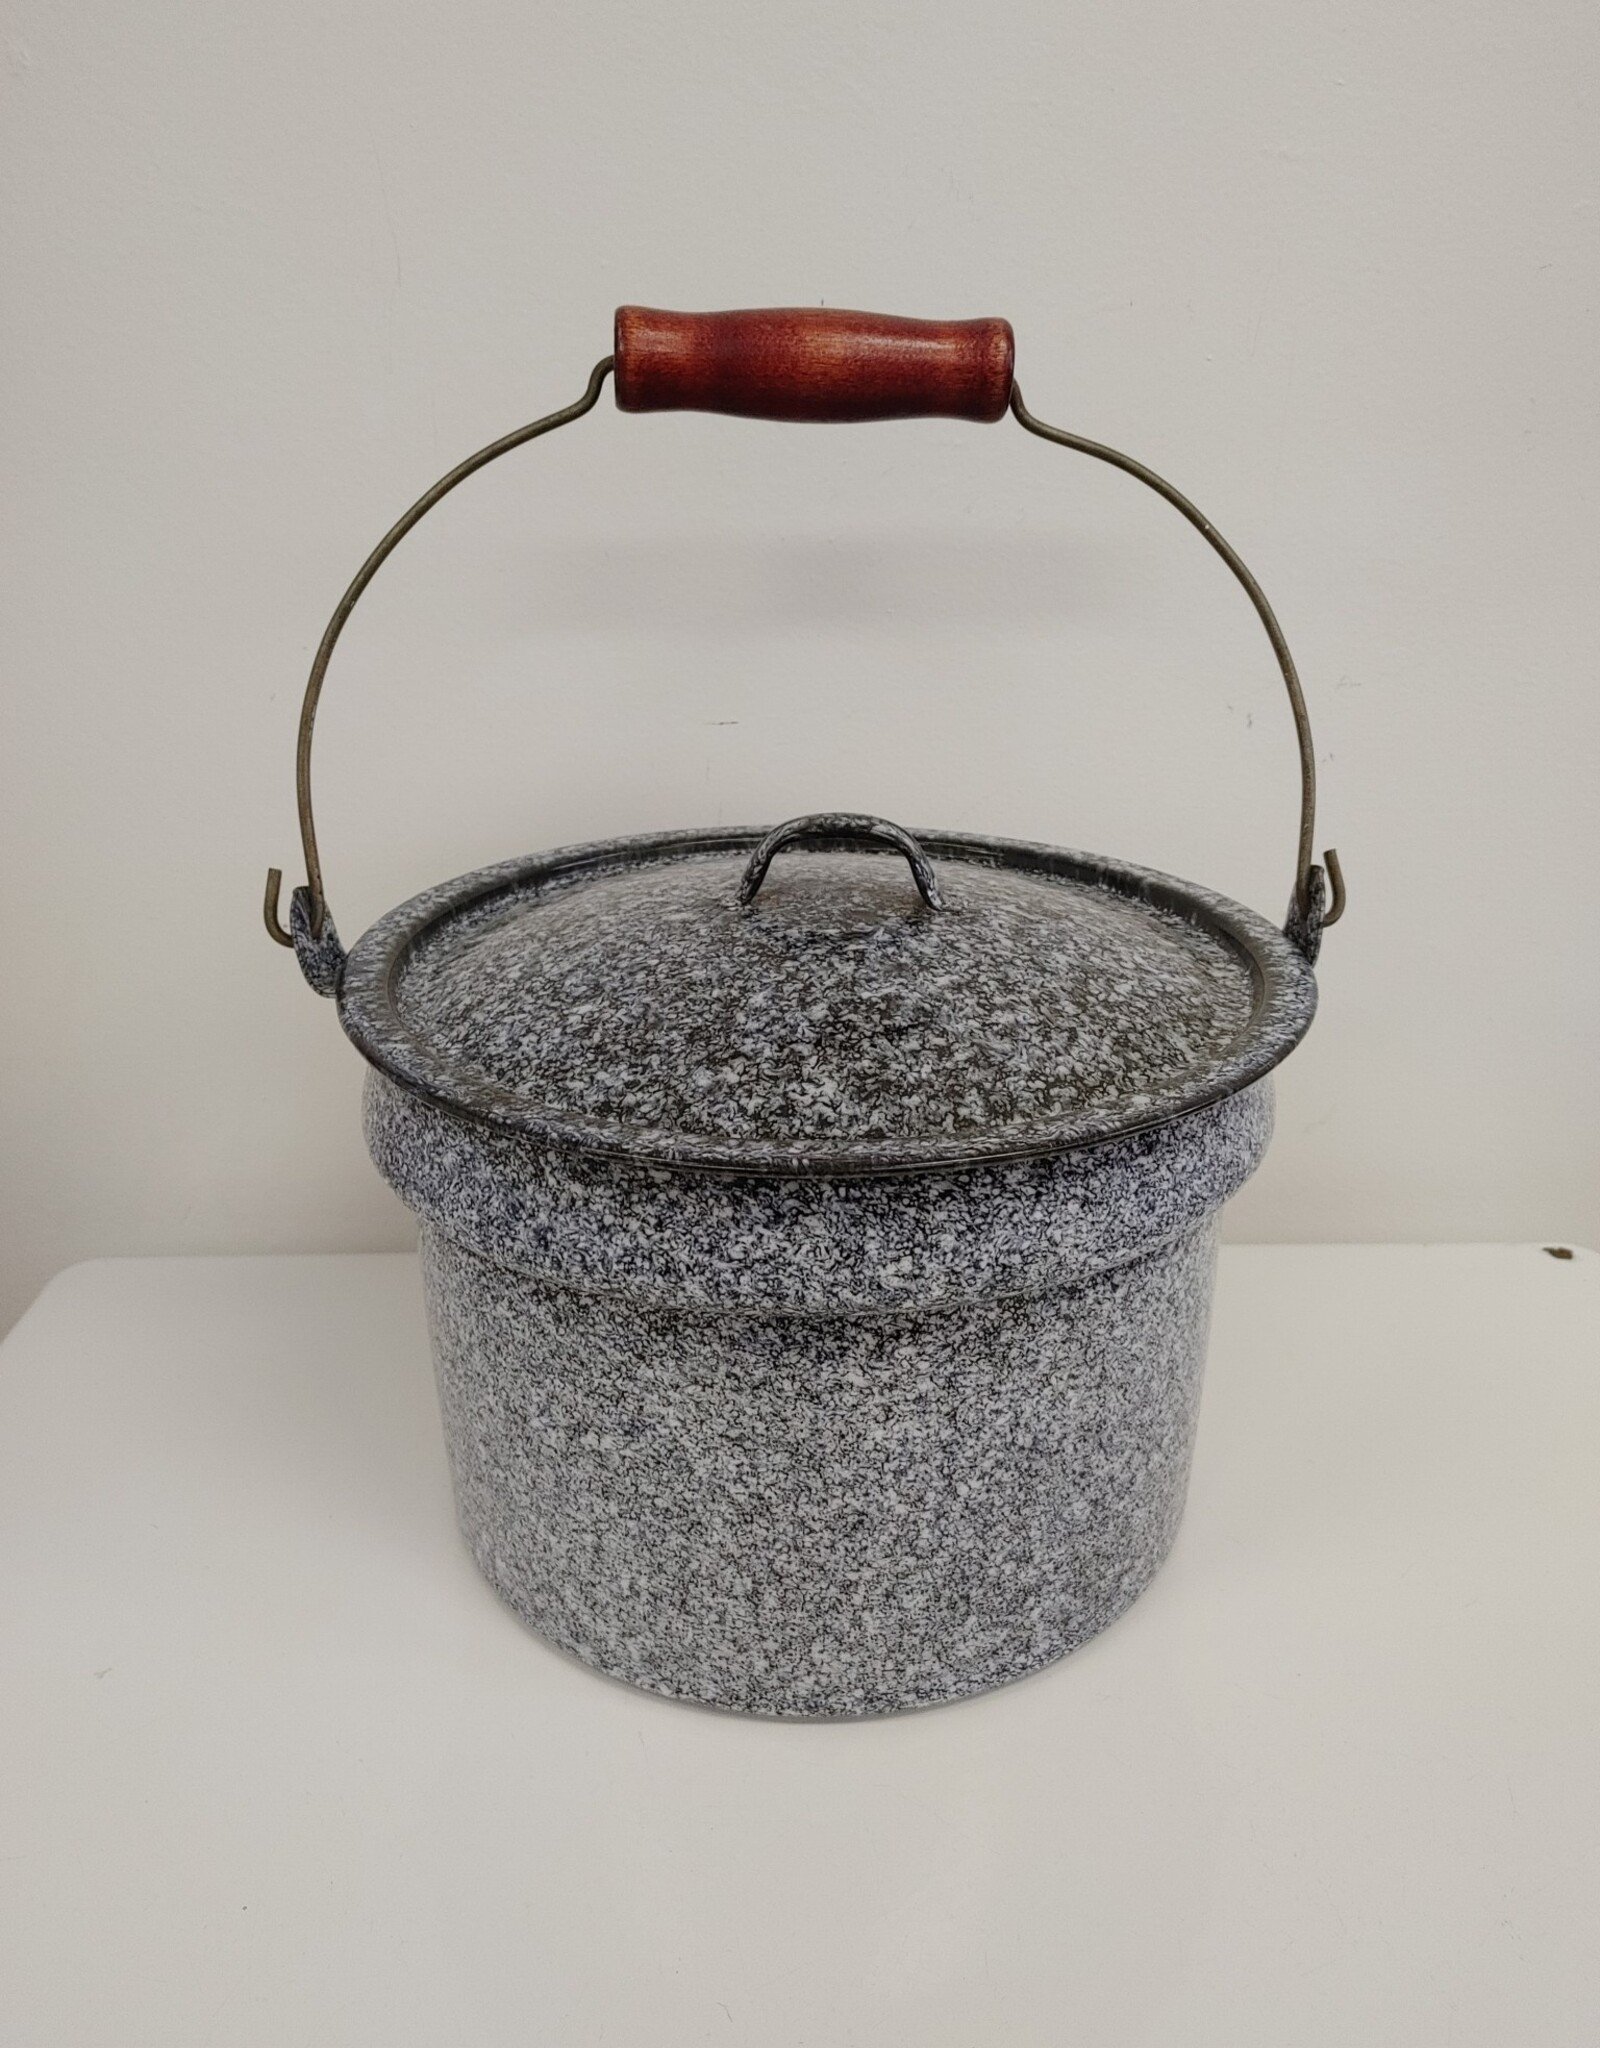 Grey Enamel Stock Pot w/lid & wood handle